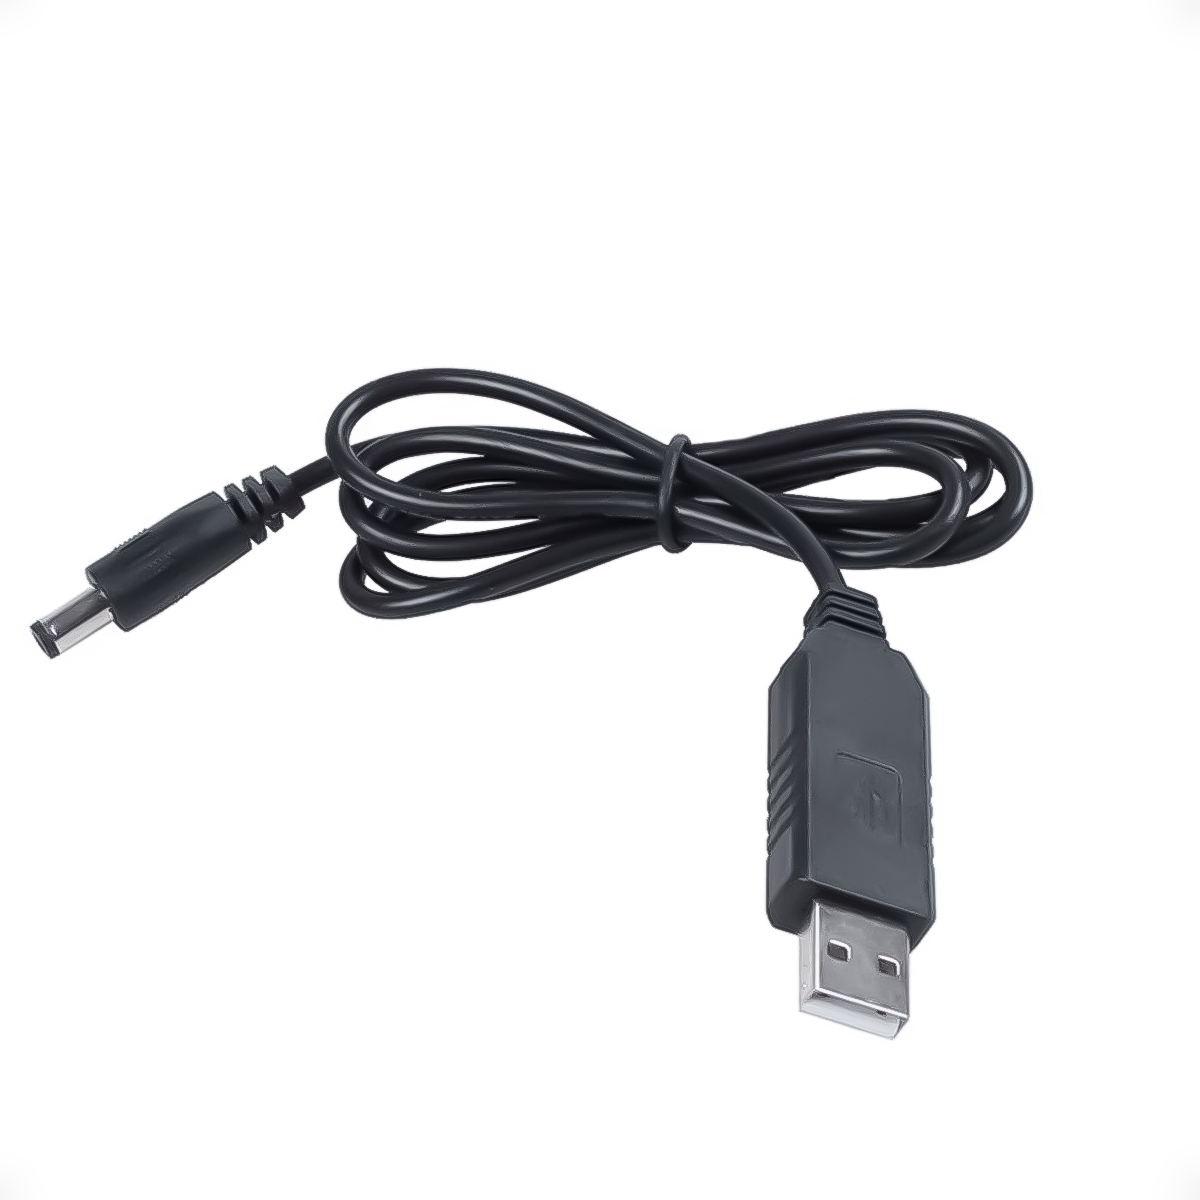 Cable de Energía para PS2/PS3/PS4 (60 cm) - Negro